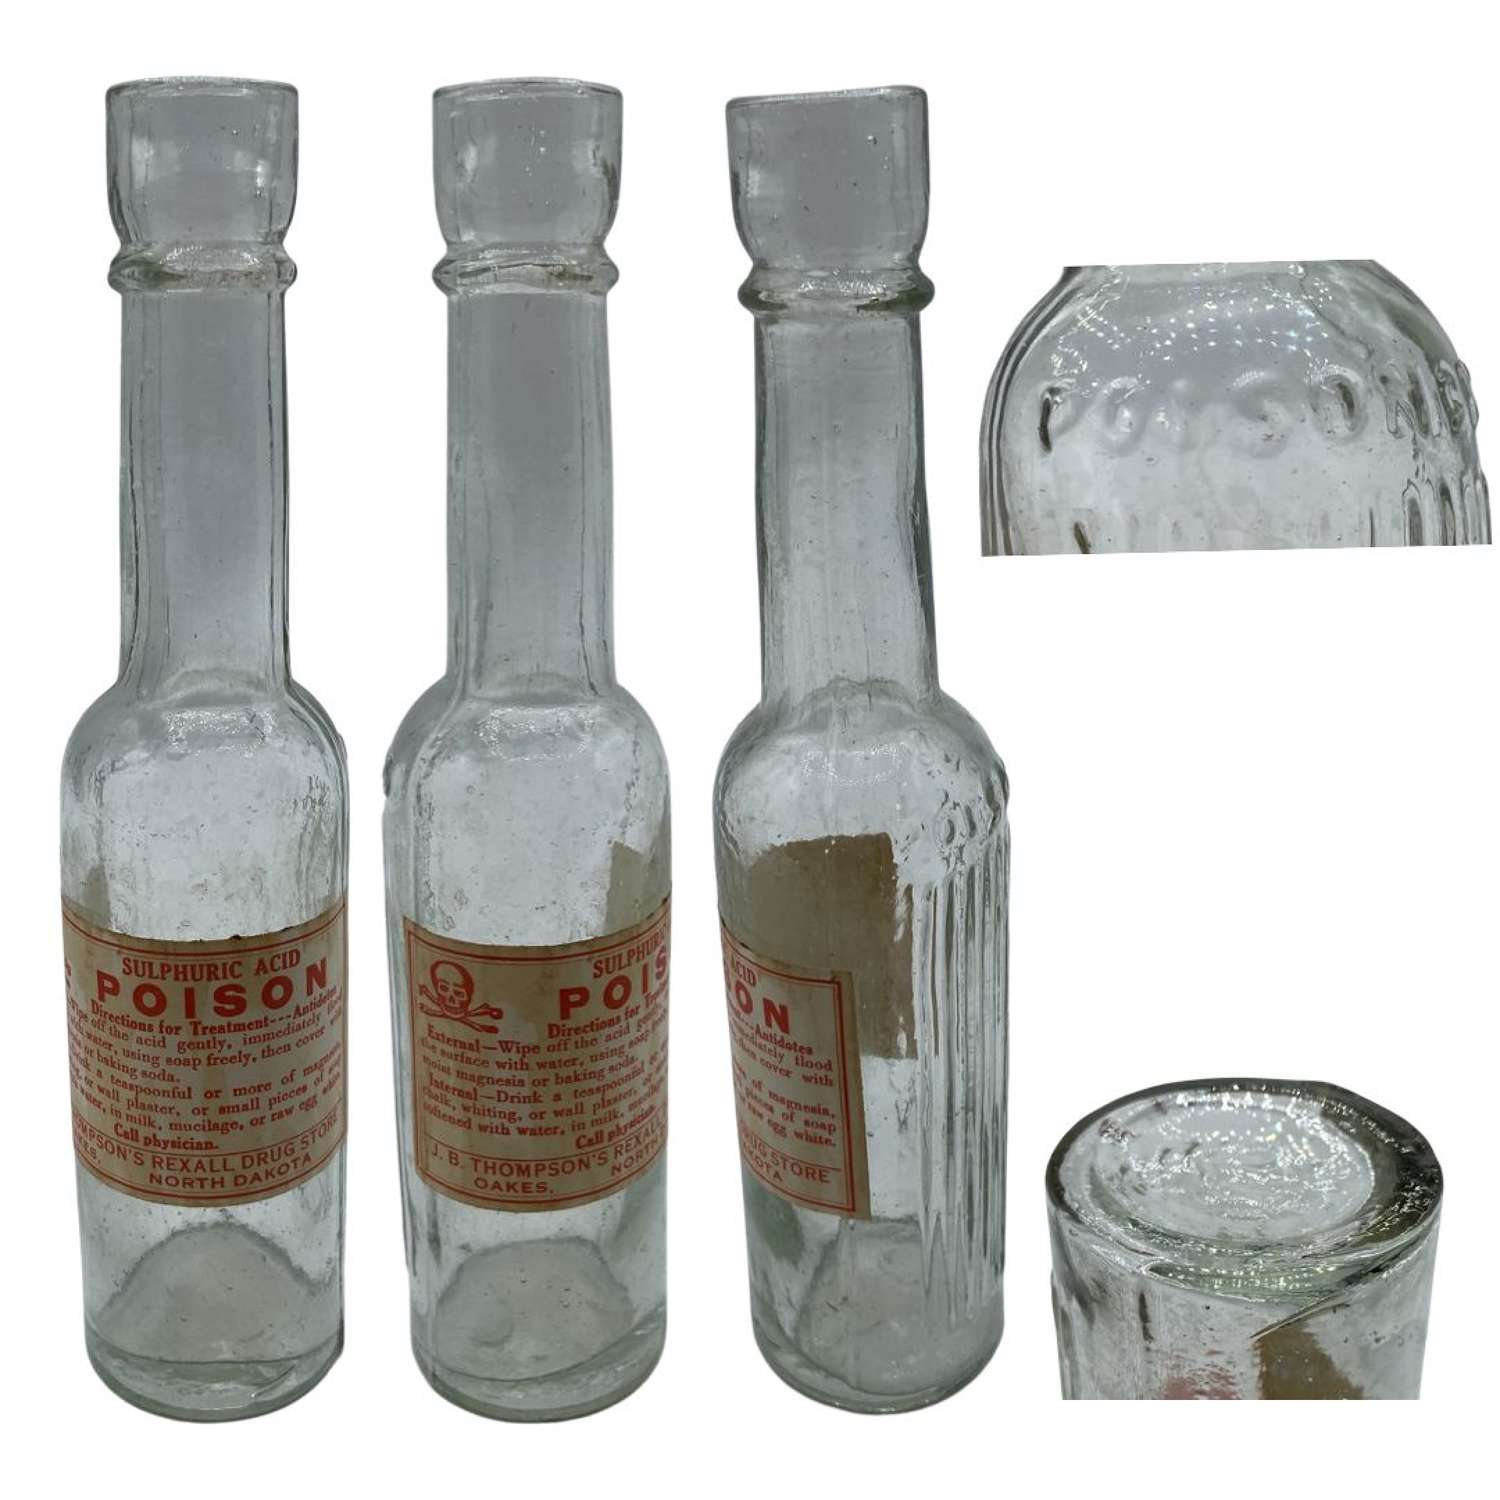 1920s Sulphuric Poison Glass Bottle By J.B Thompson Rexall Dacota USA